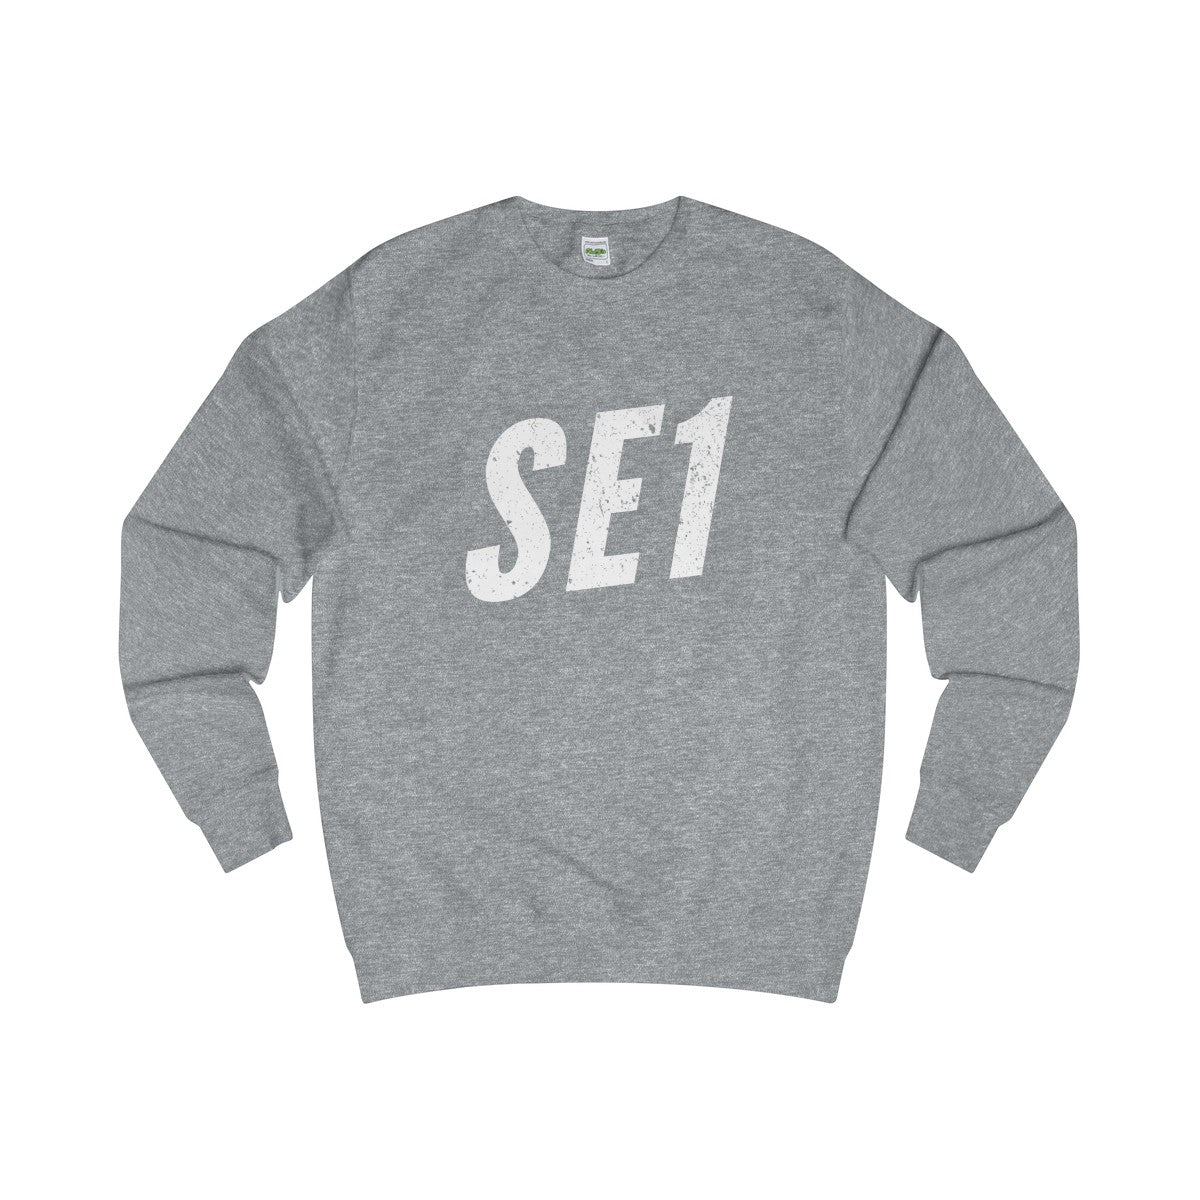 Southwark SE1 Sweater